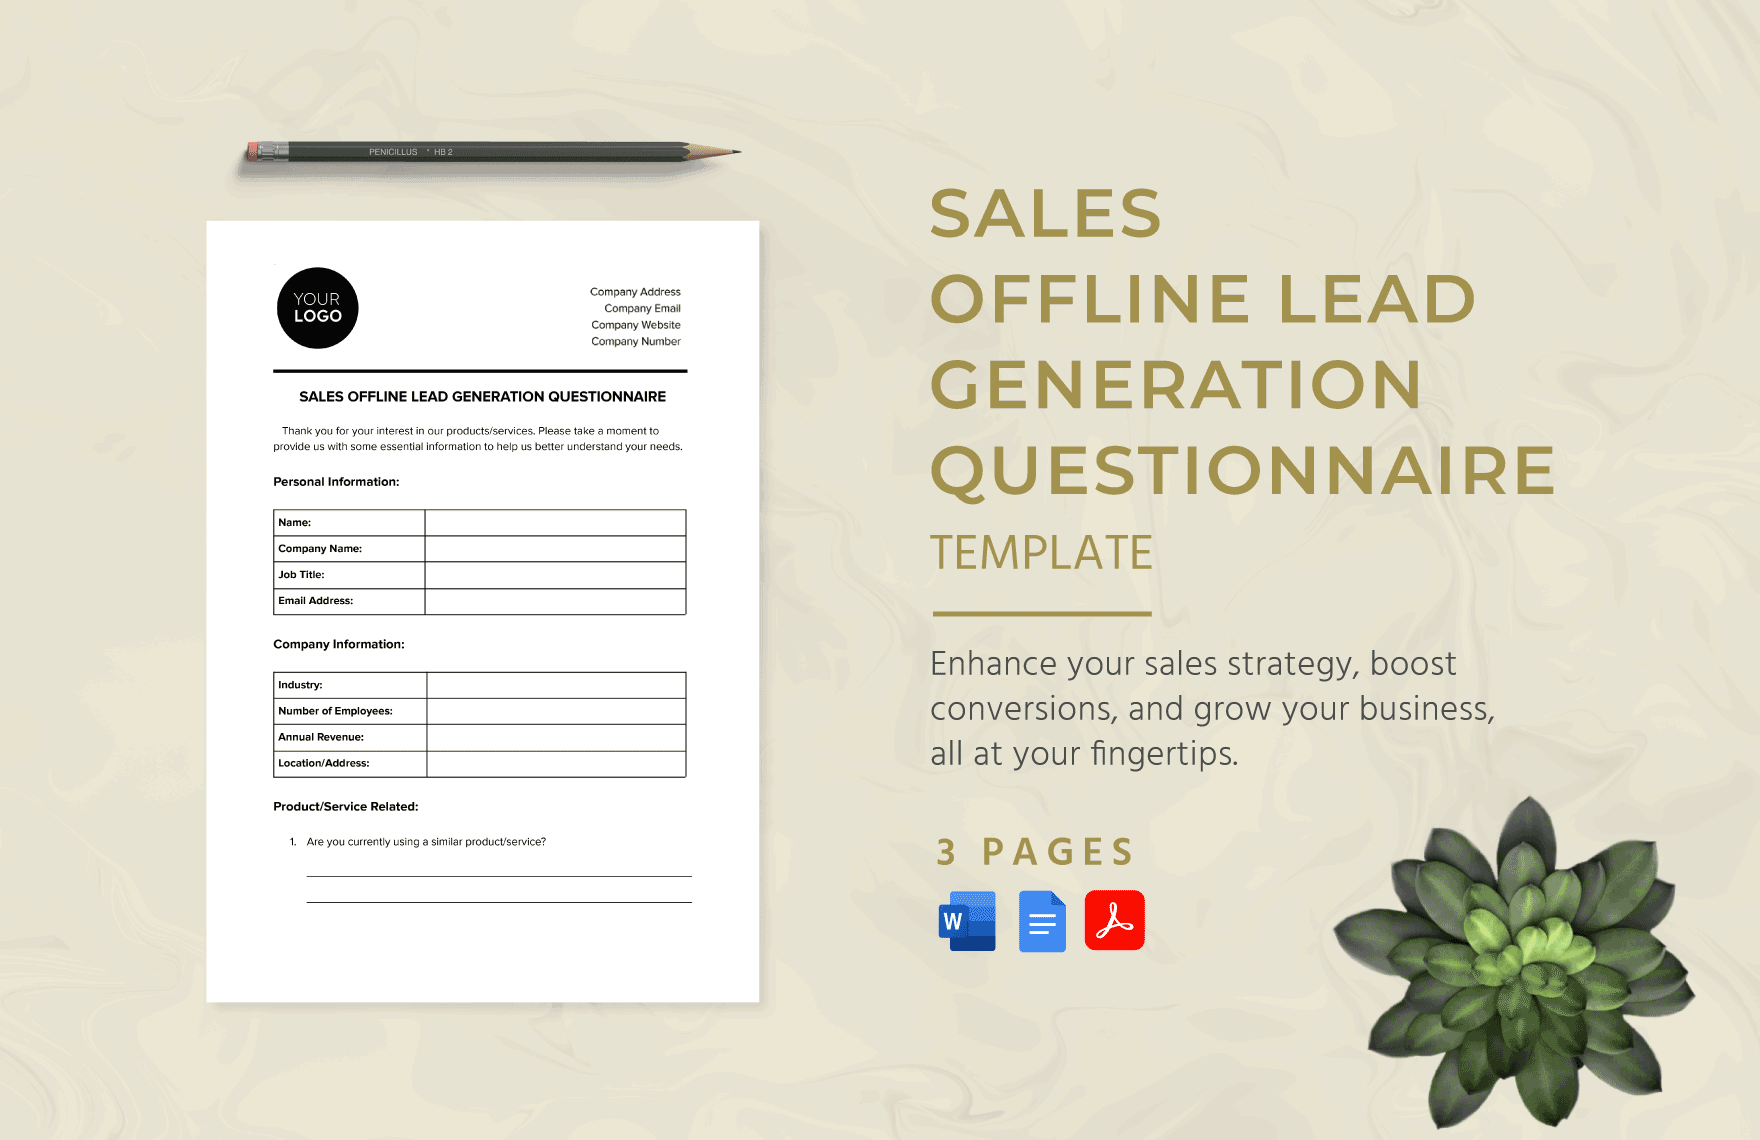 Sales Offline Lead Generation Questionnaire Template in Word, Google Docs, PDF